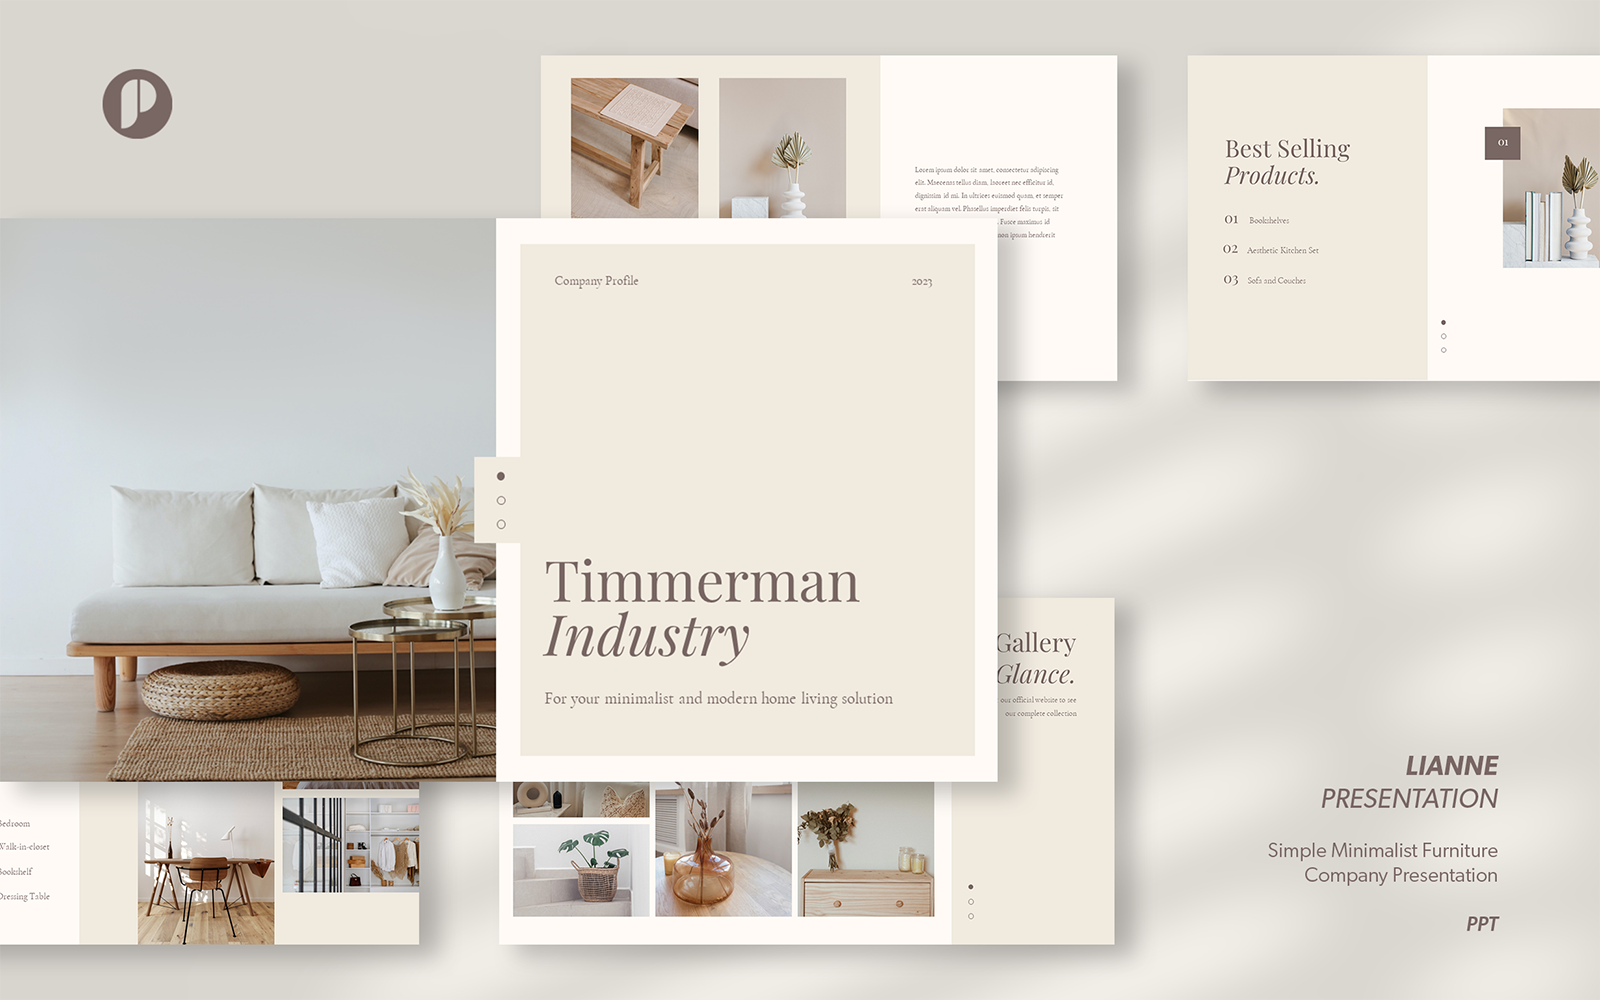 Lianne – Creamy Simple Minimalist Furniture Company Presentation